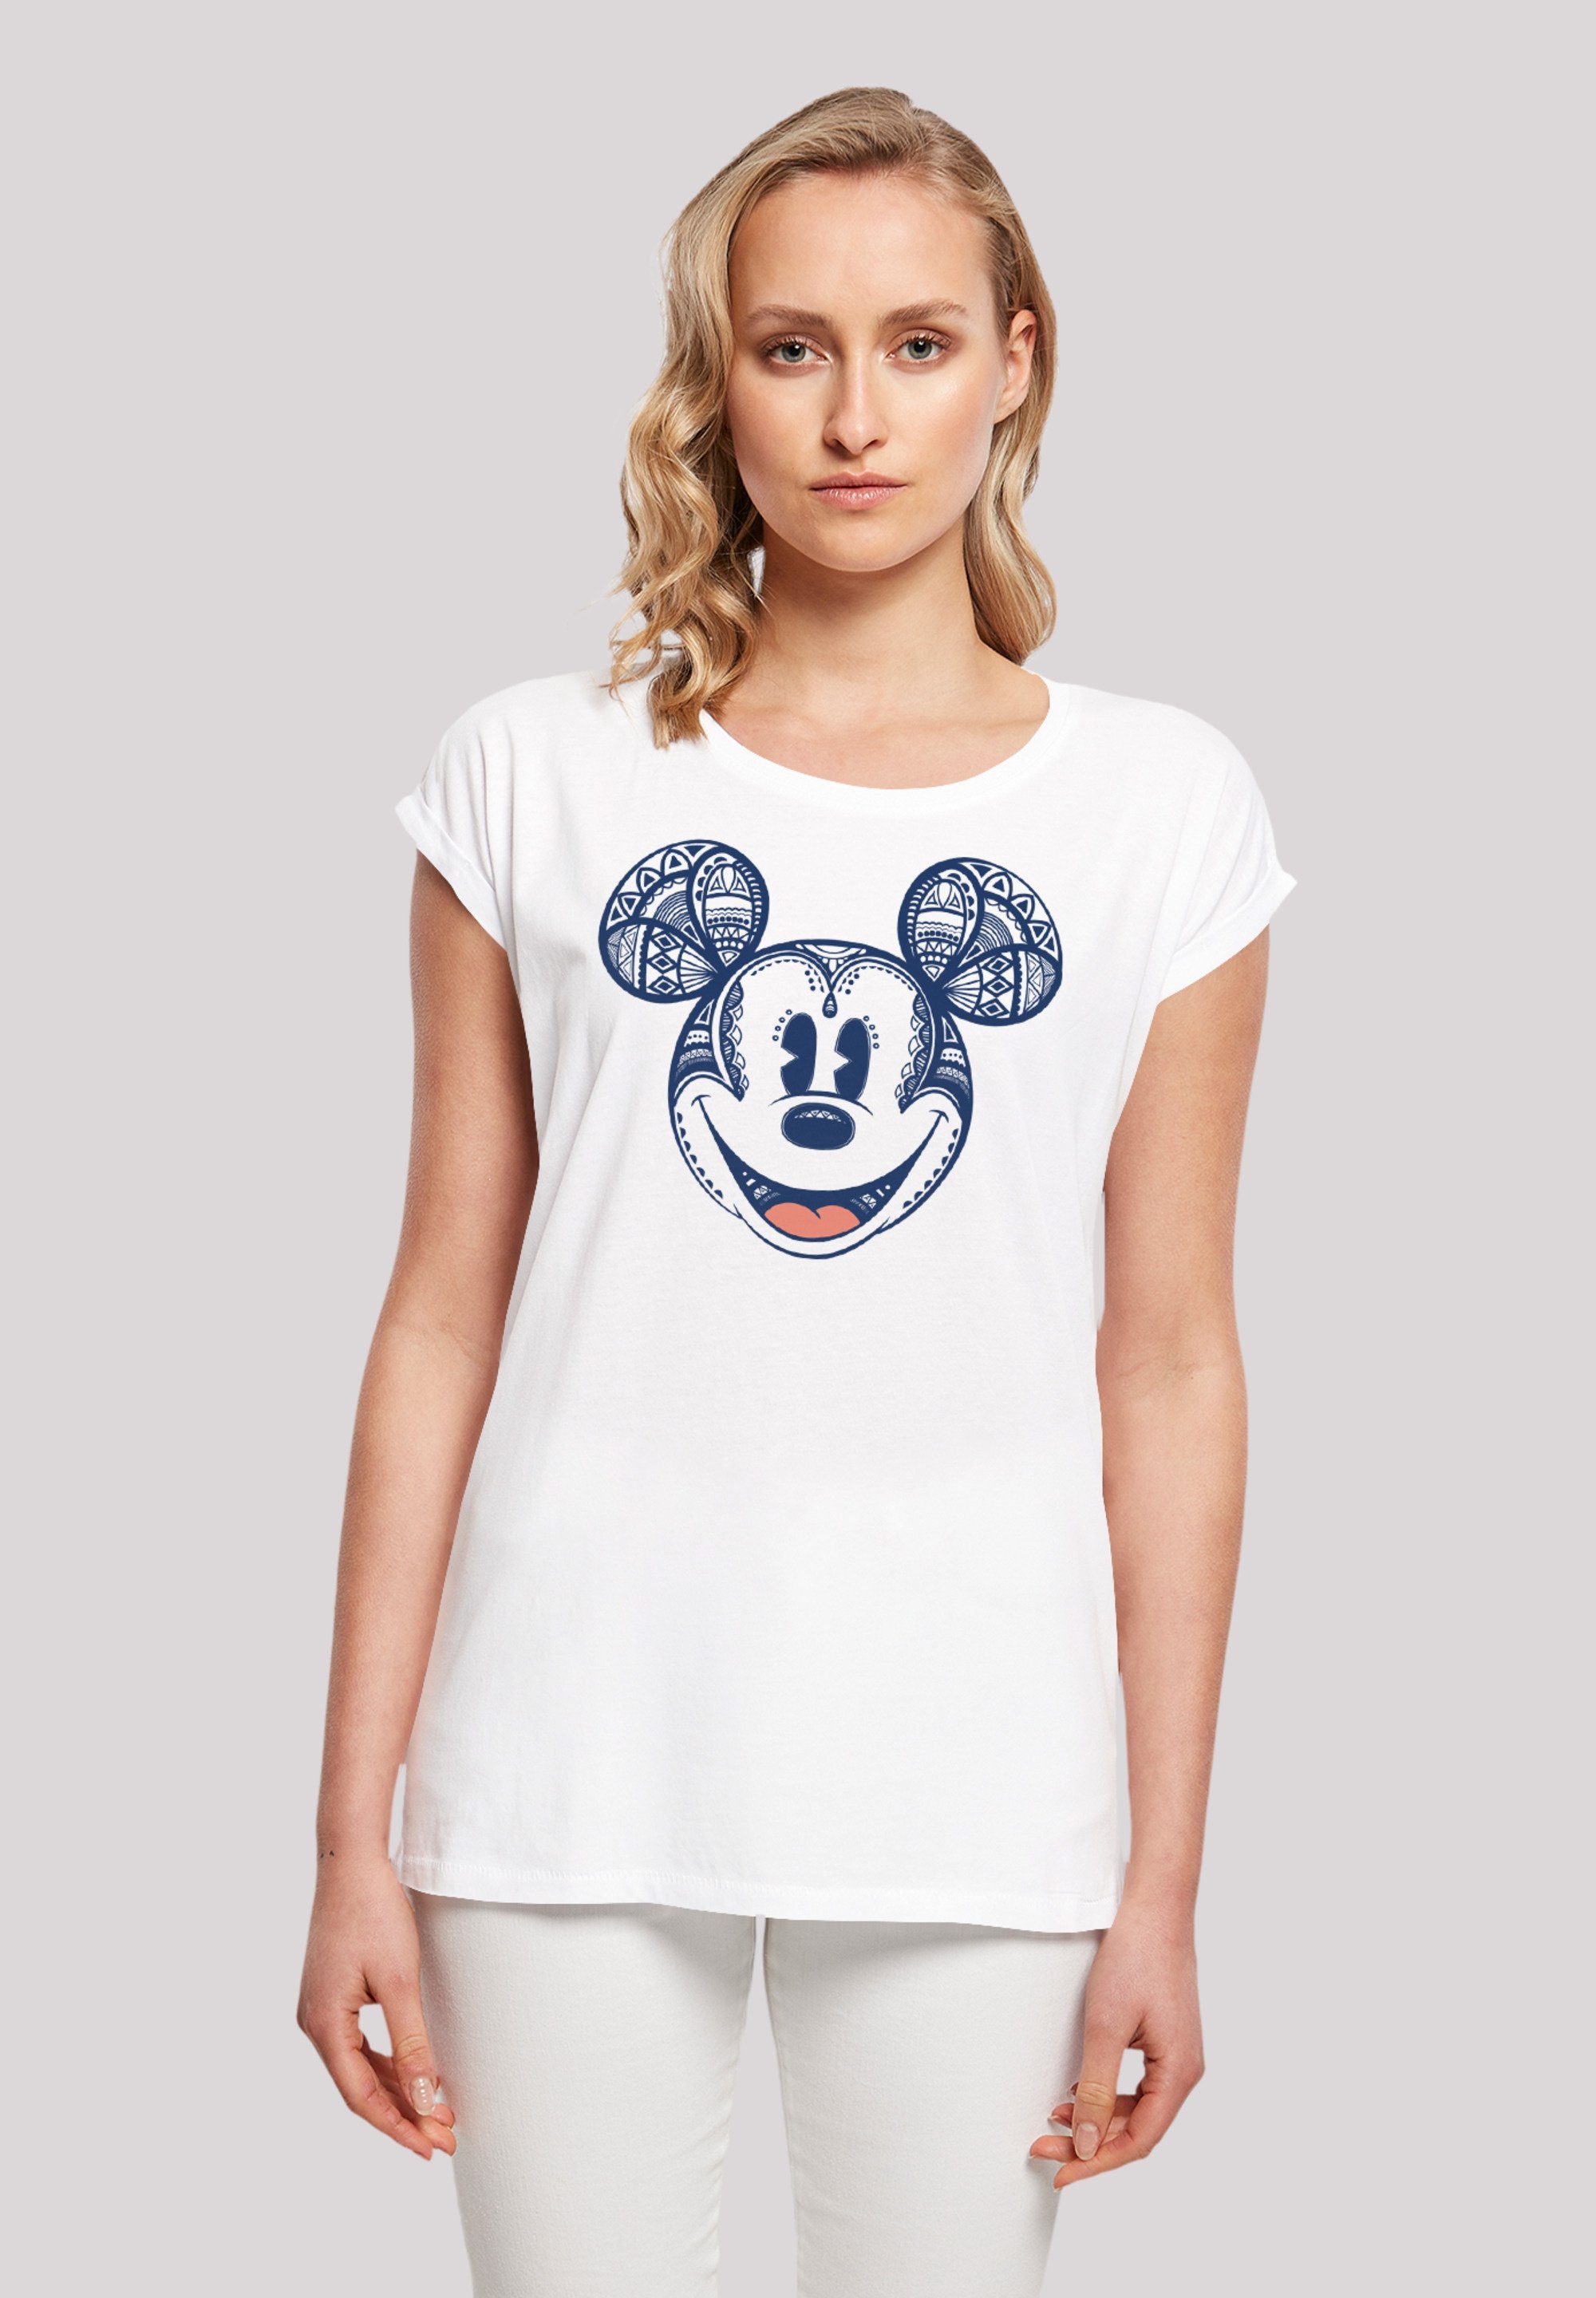 F4NT4STIC T-Shirt Disney Micky Maus Tribal Premium Qualität, Offiziell  lizenziertes Disney T-Shirt